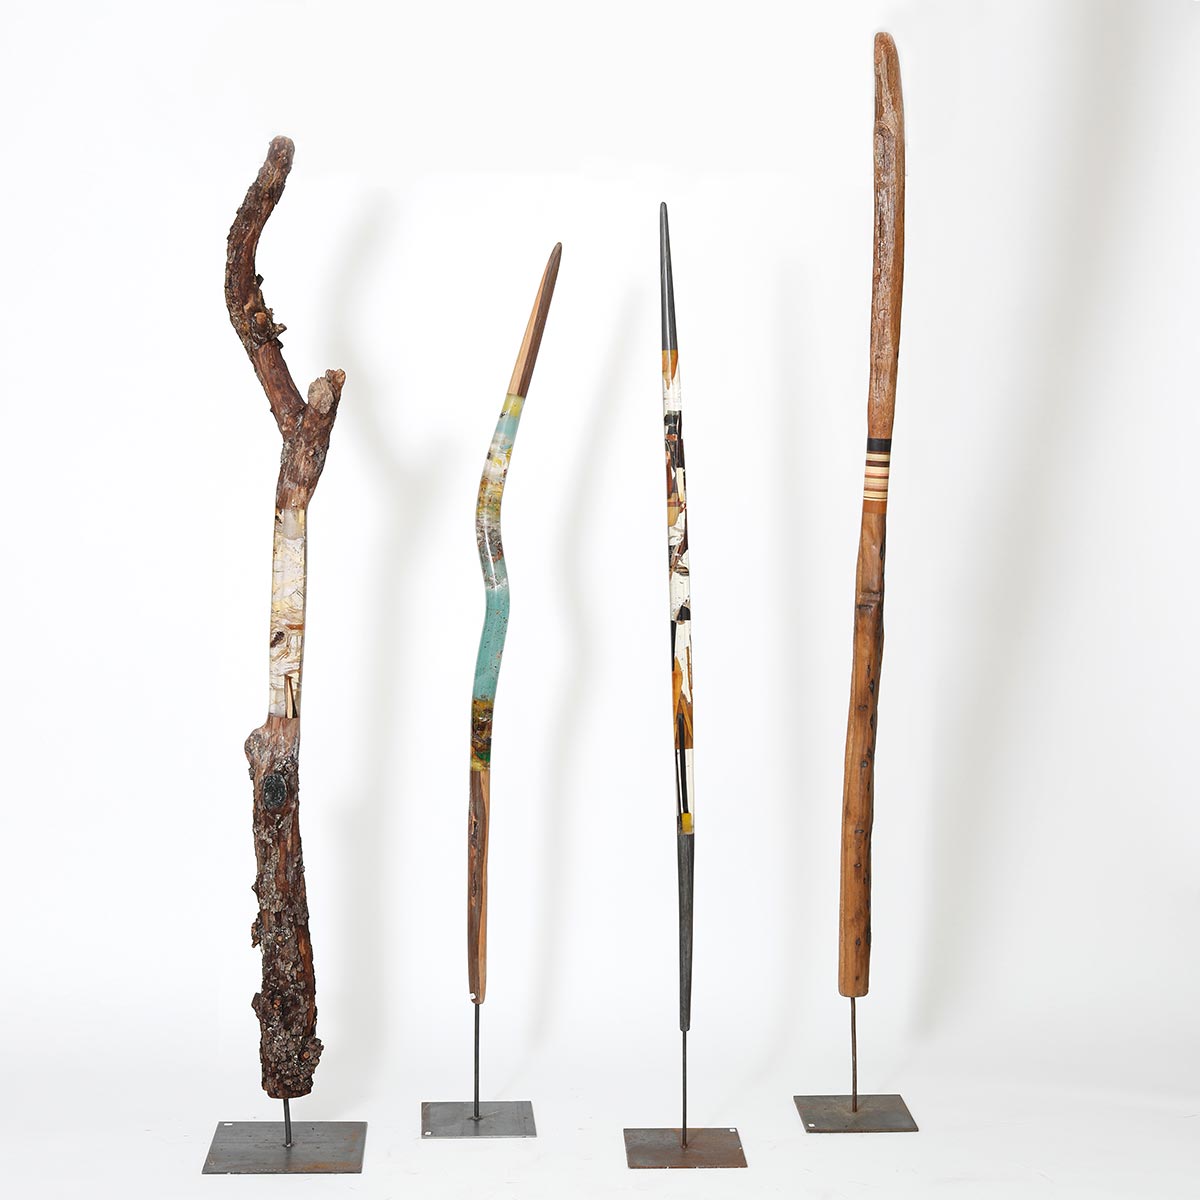 Galerie Insighter Paris by Vanessa Metayer presents Vincent Lajarige sculptures